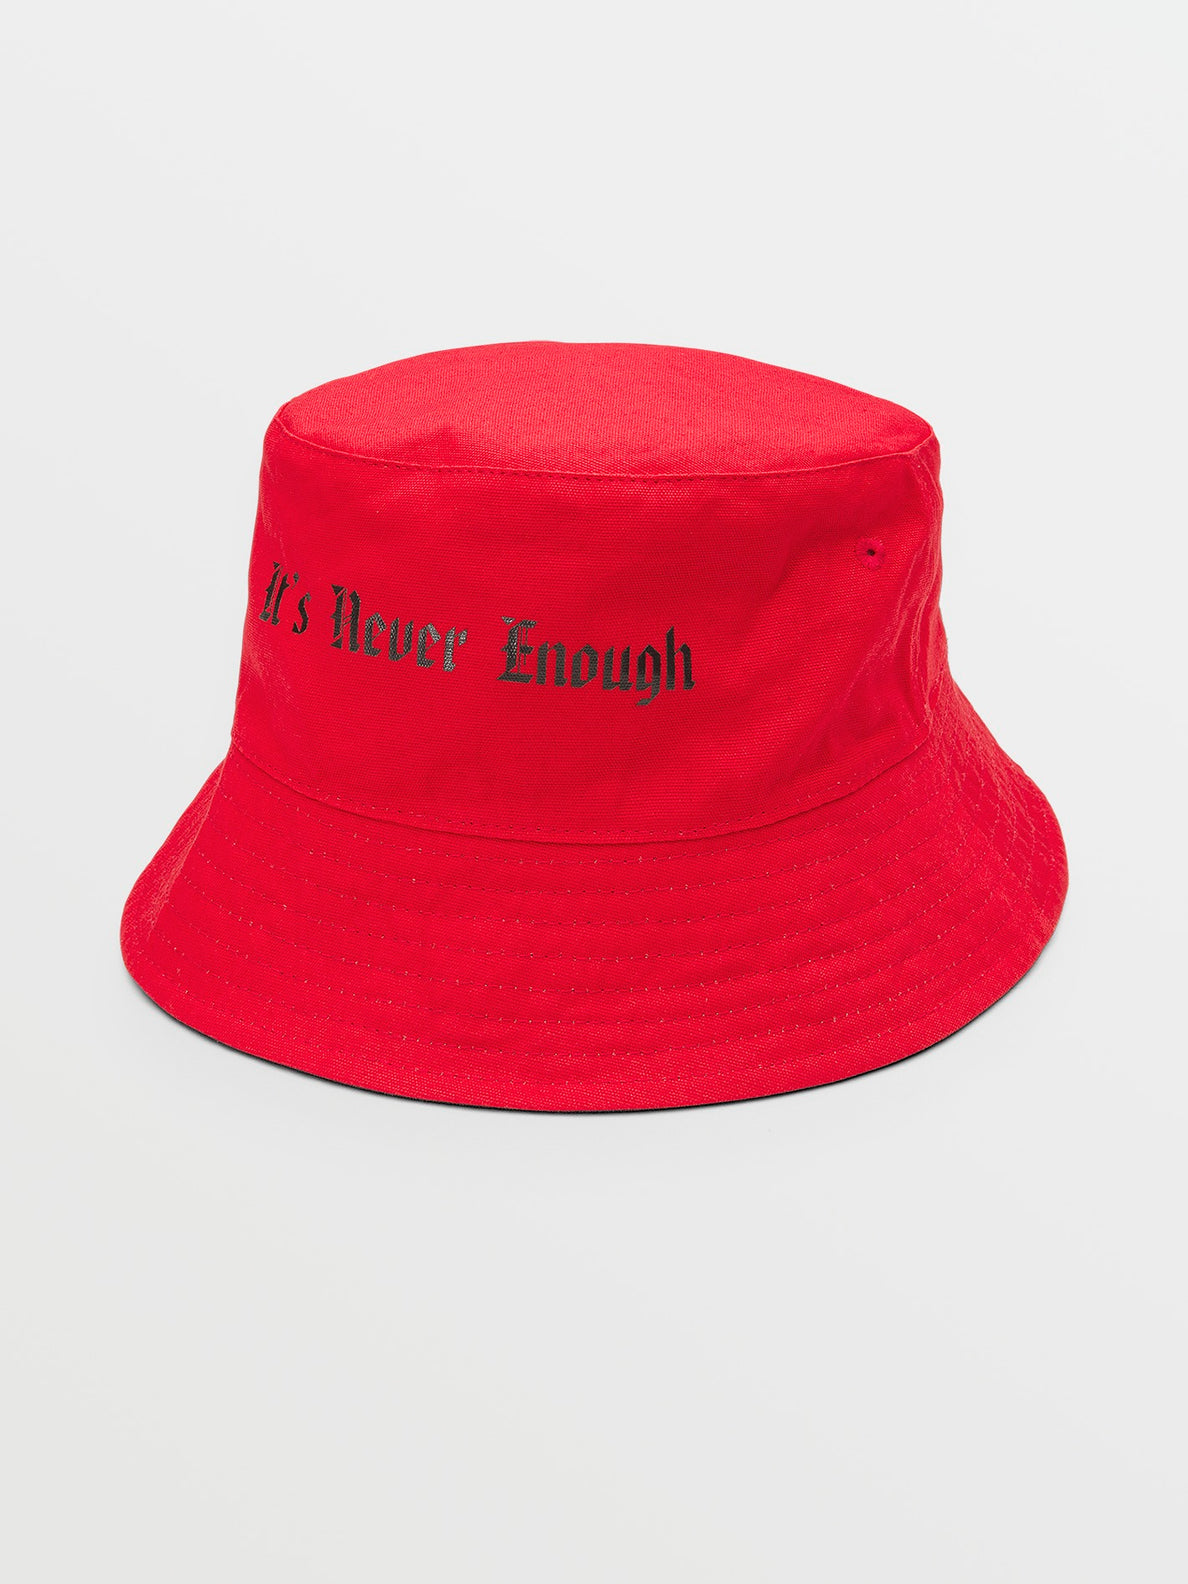 Schroff X Volcom Bucket Hat - Khaki